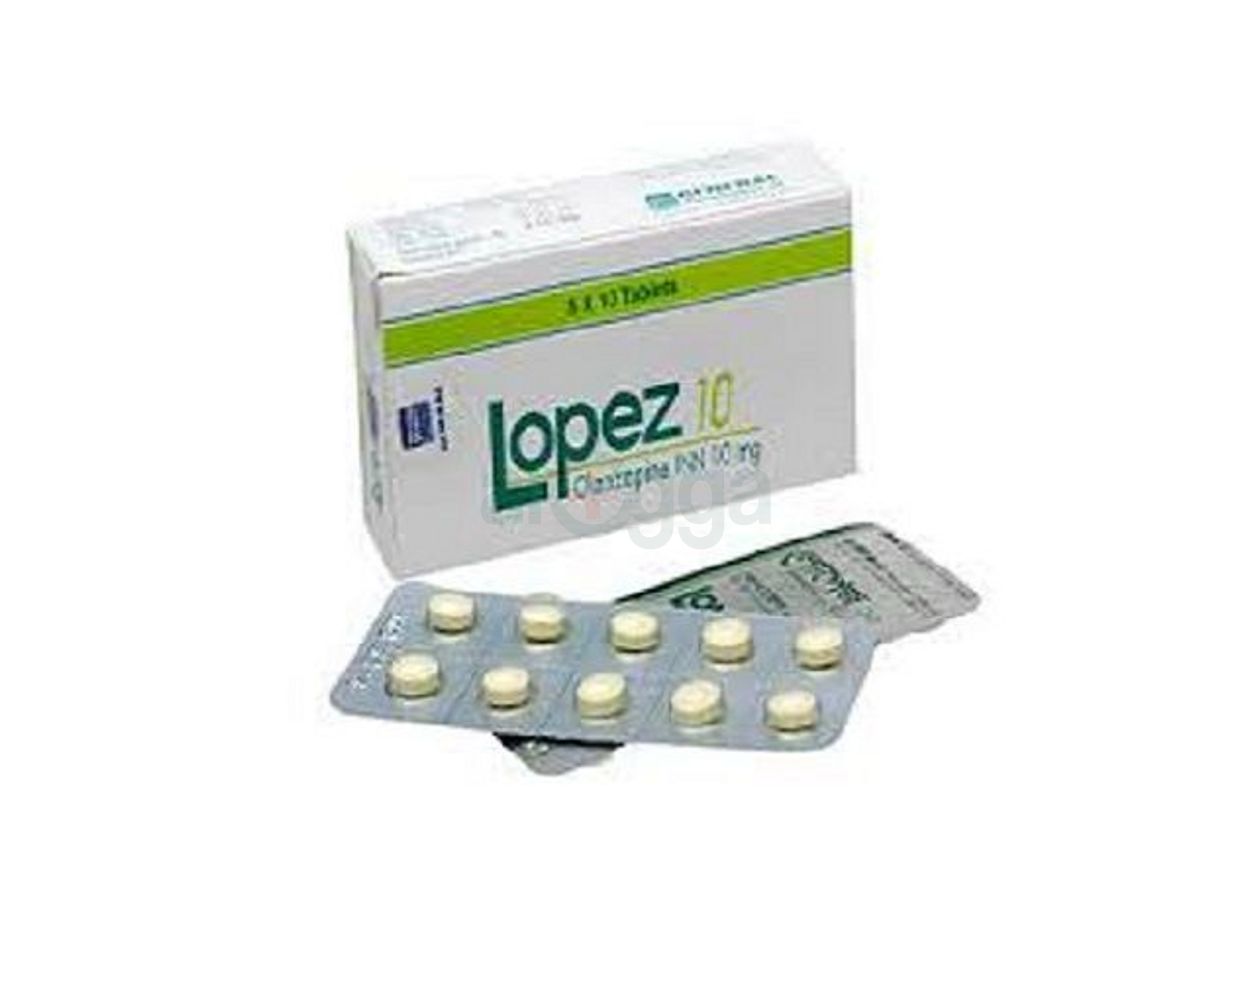 Lopez 10